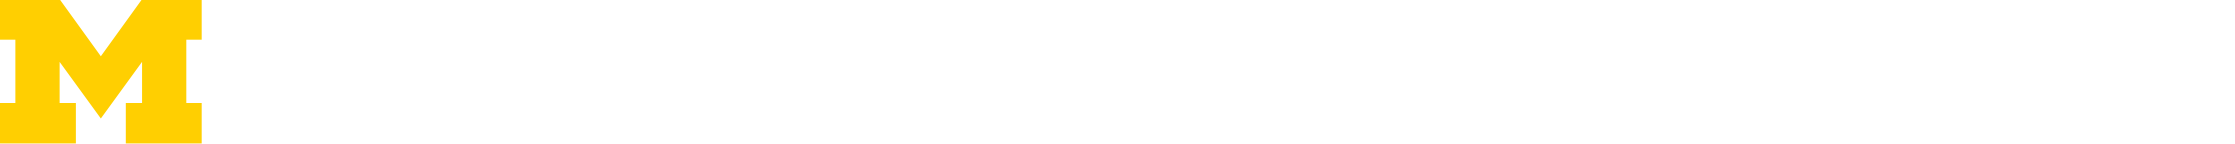 Michigan Quantum Science & Technology Working Group logo